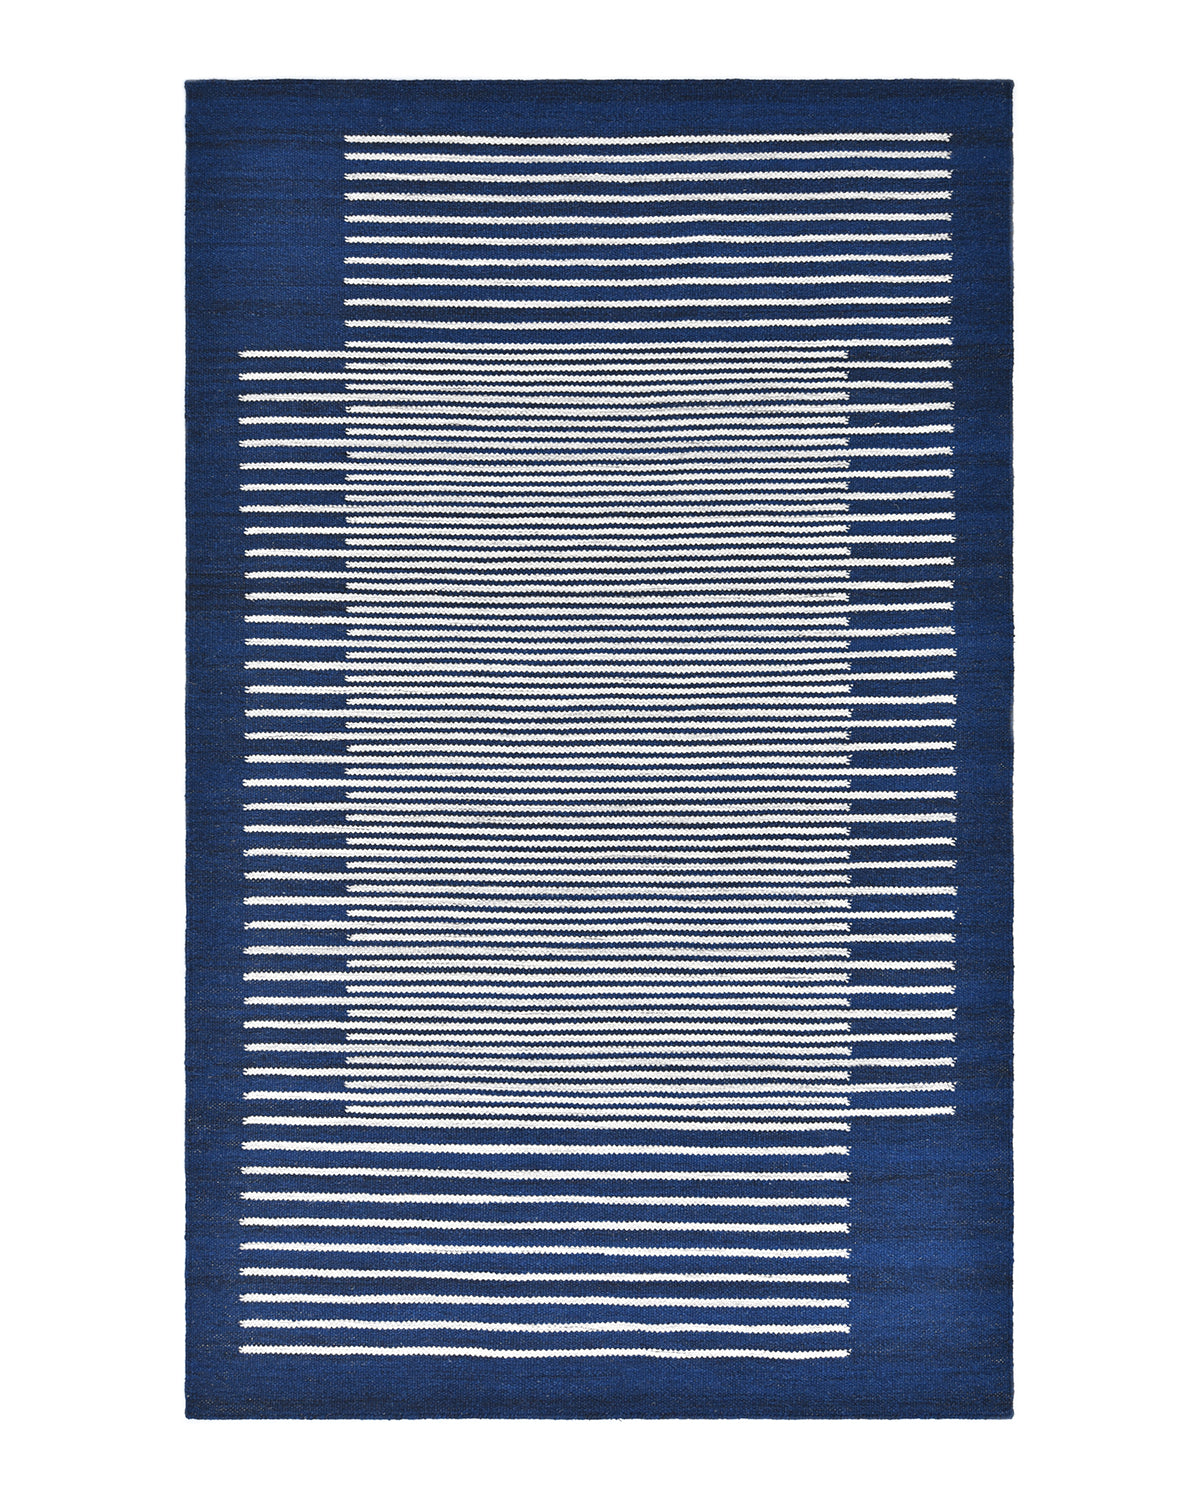 George Handmade Contemporary Striped Navy Area Rug